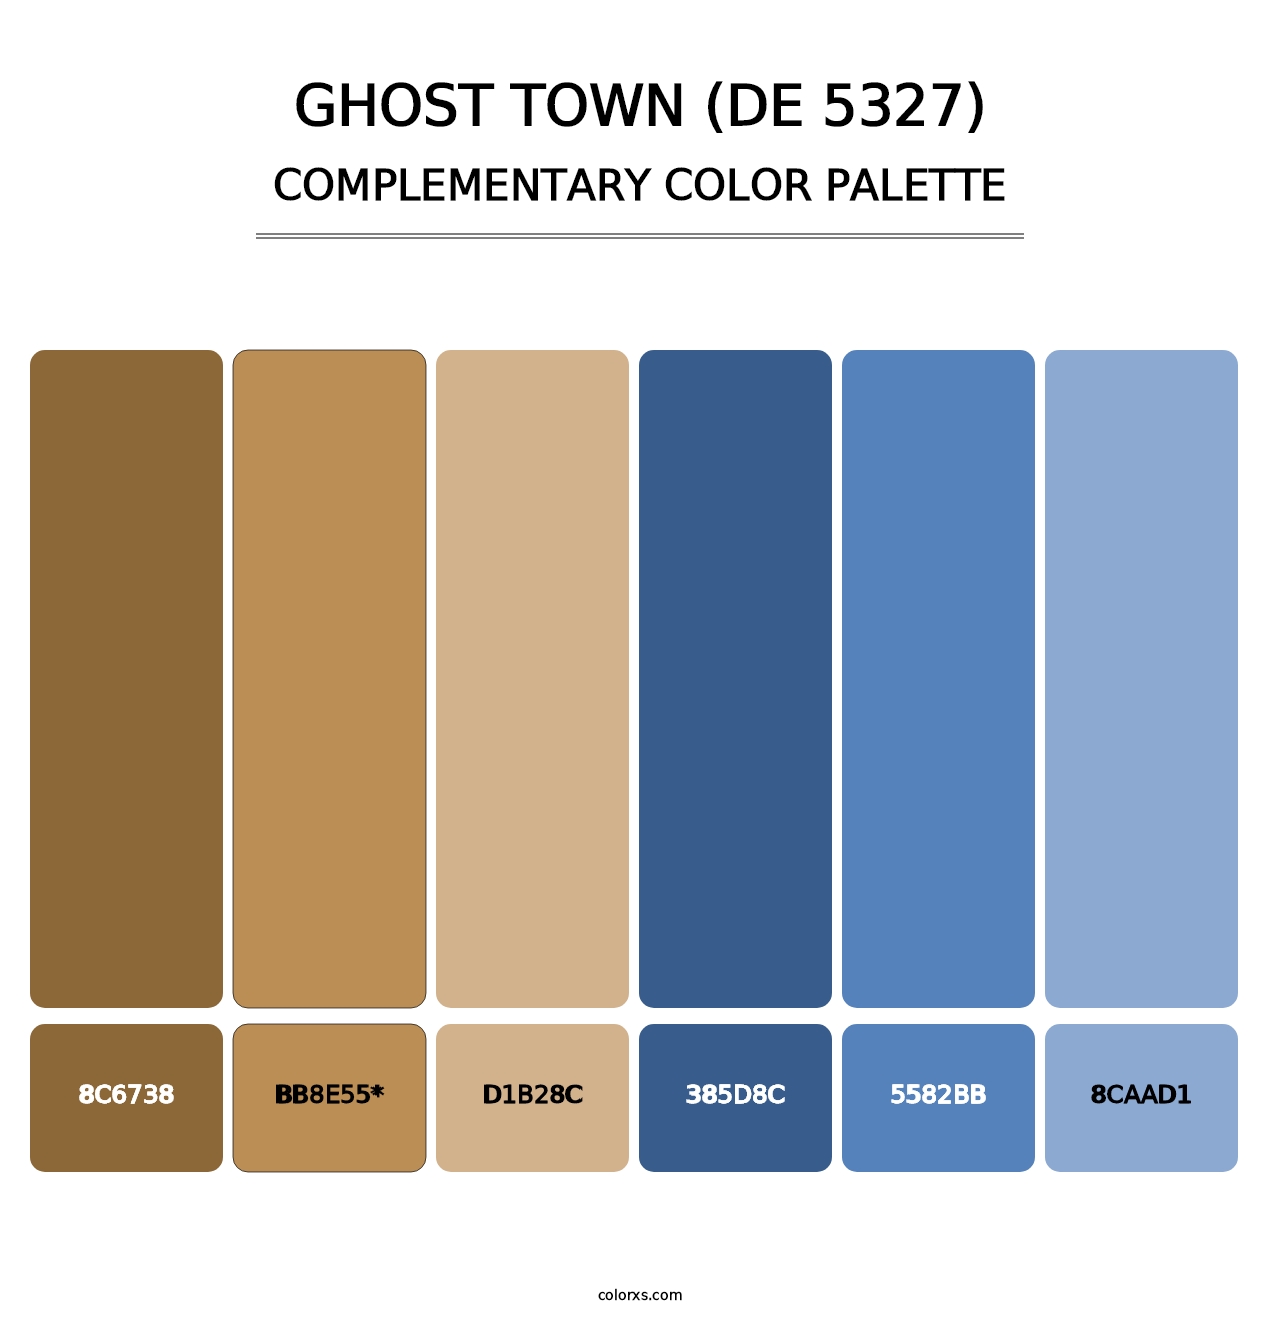 Ghost Town (DE 5327) - Complementary Color Palette